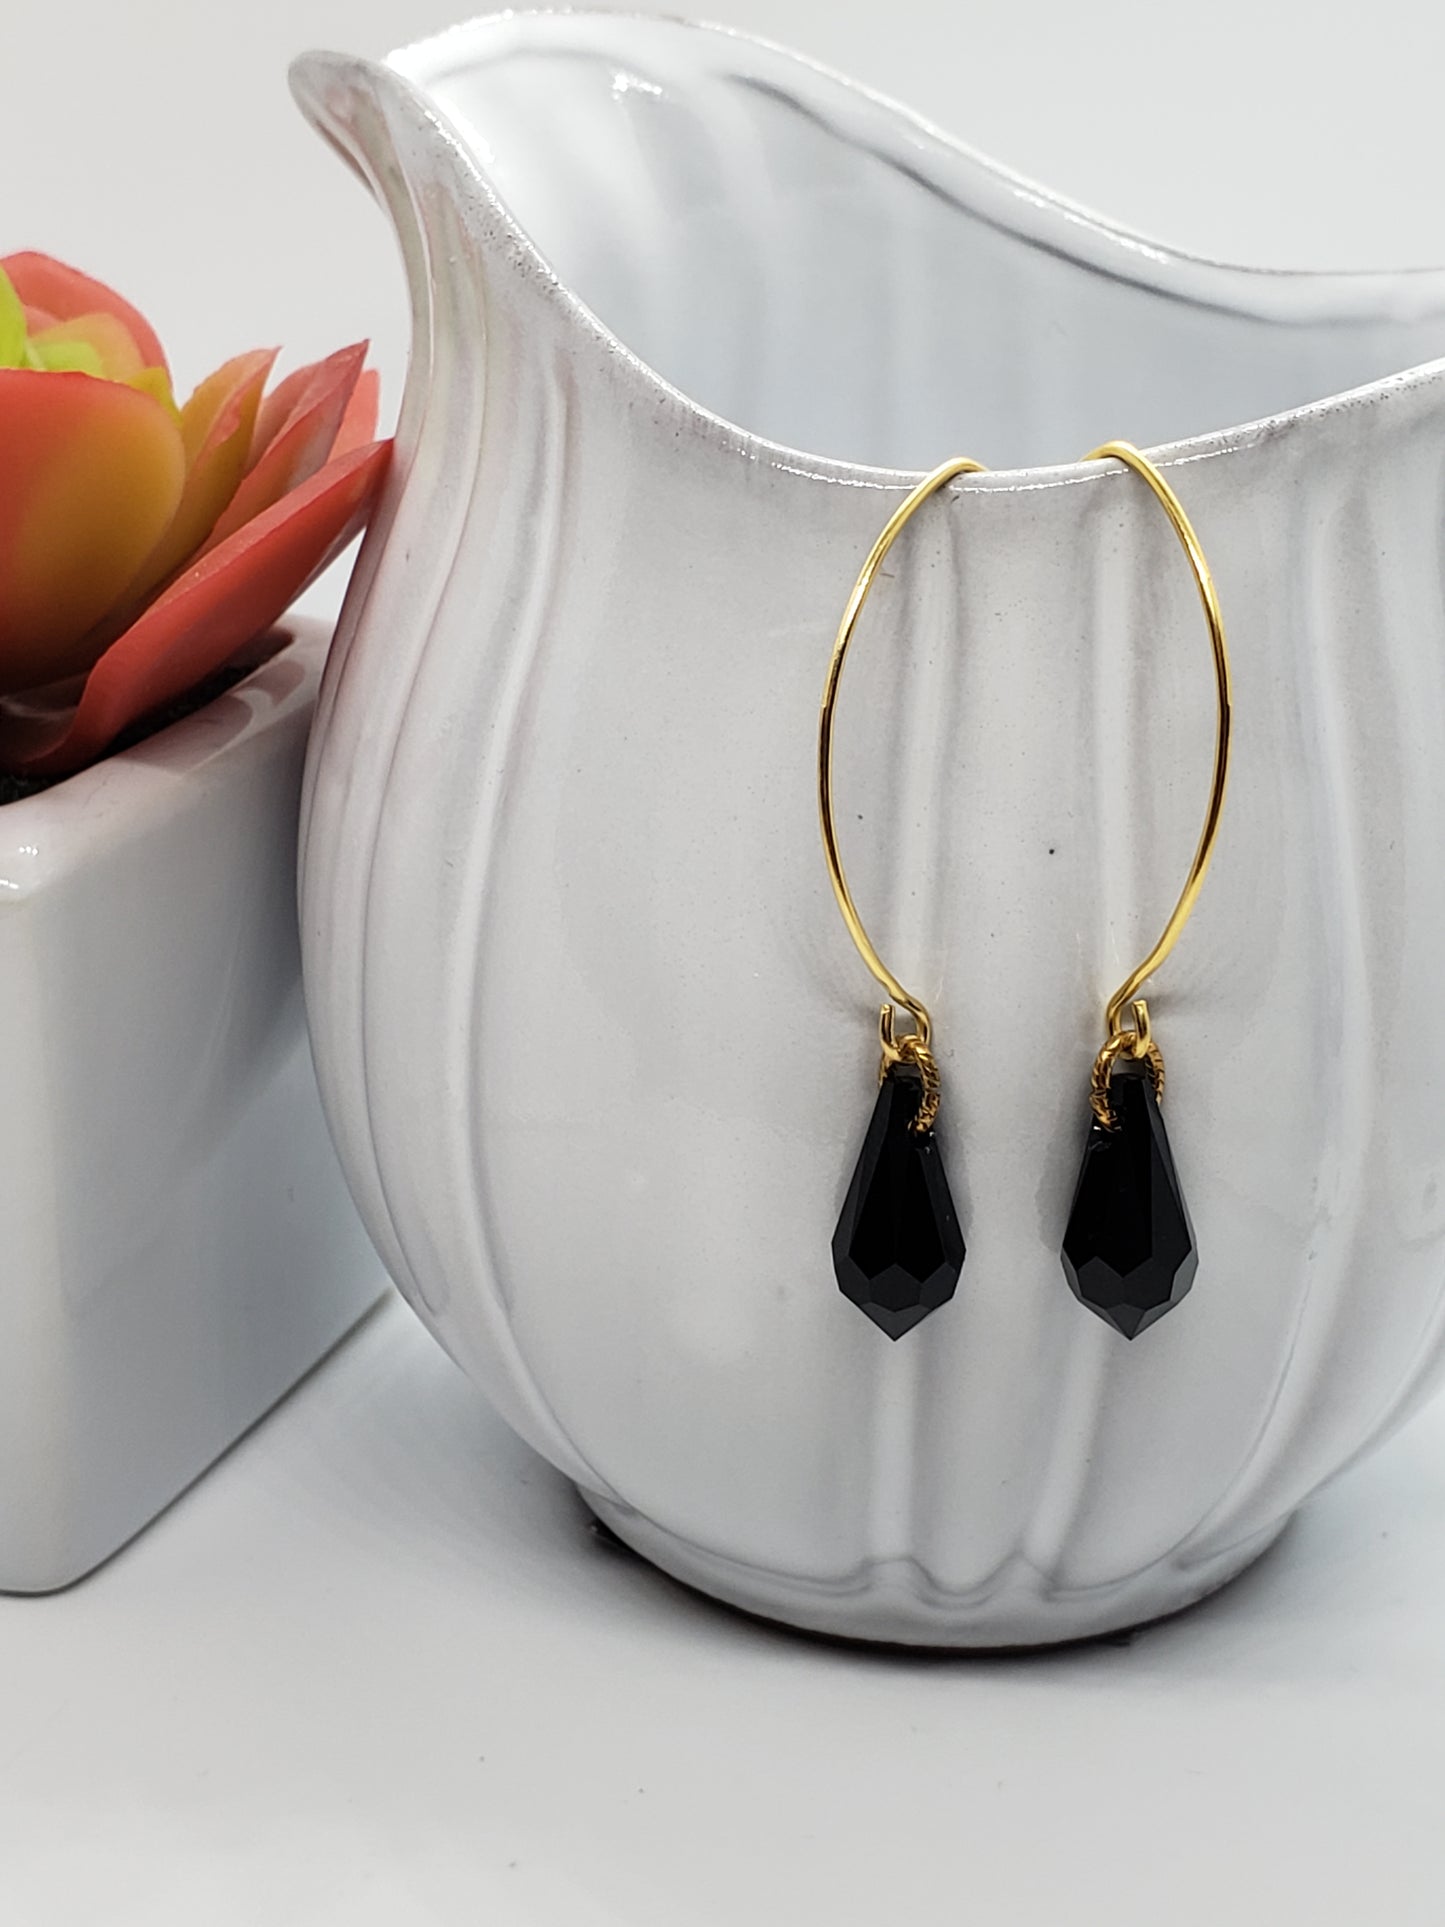 Black and Gold Swarovski earrings